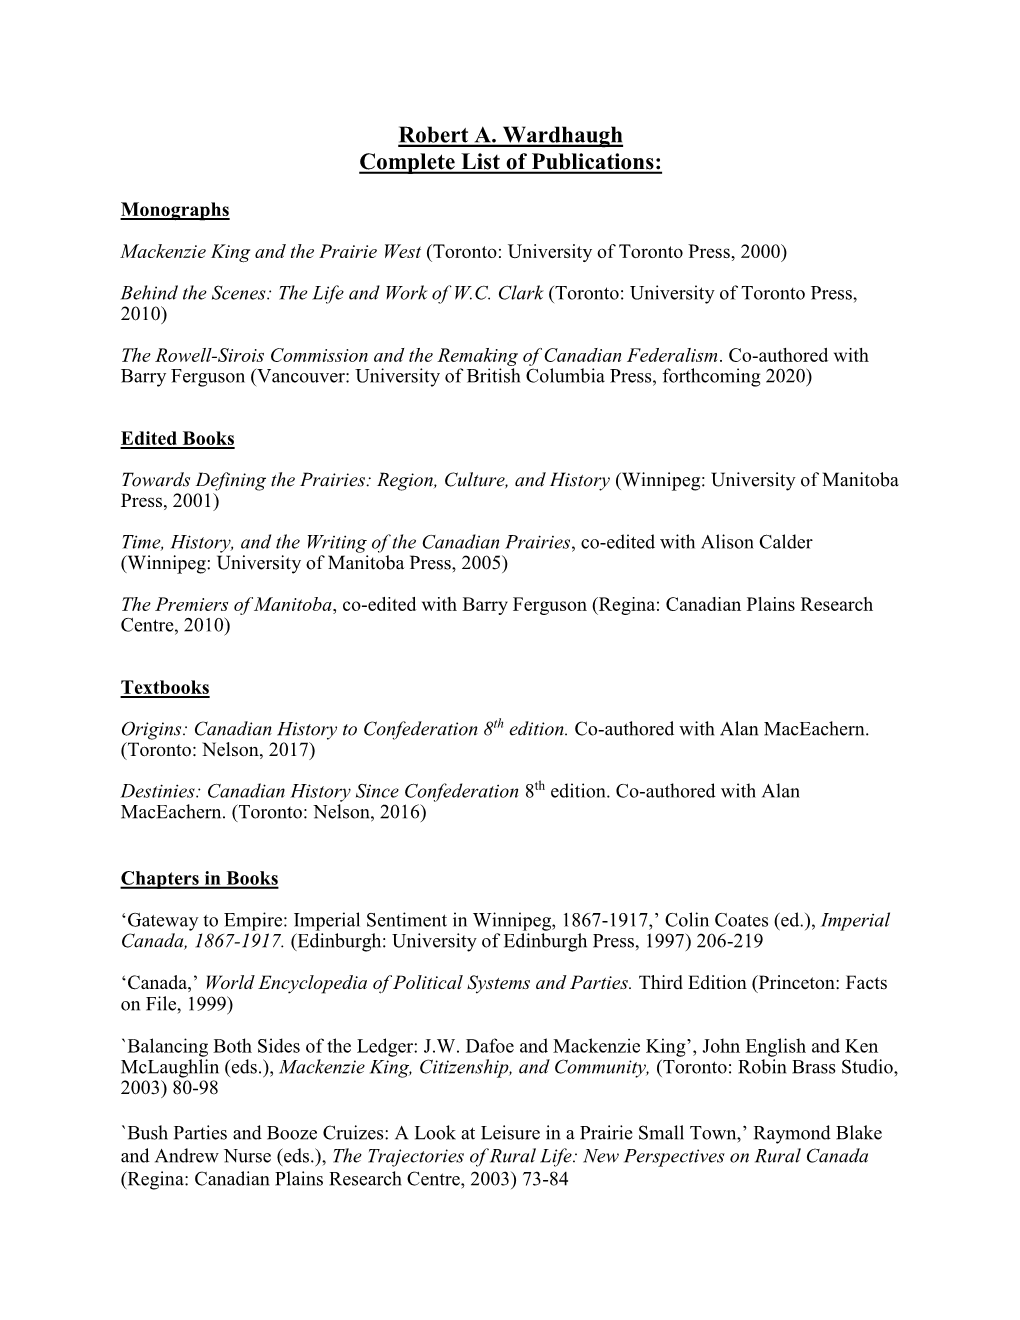 Robert A. Wardhaugh Complete List of Publications